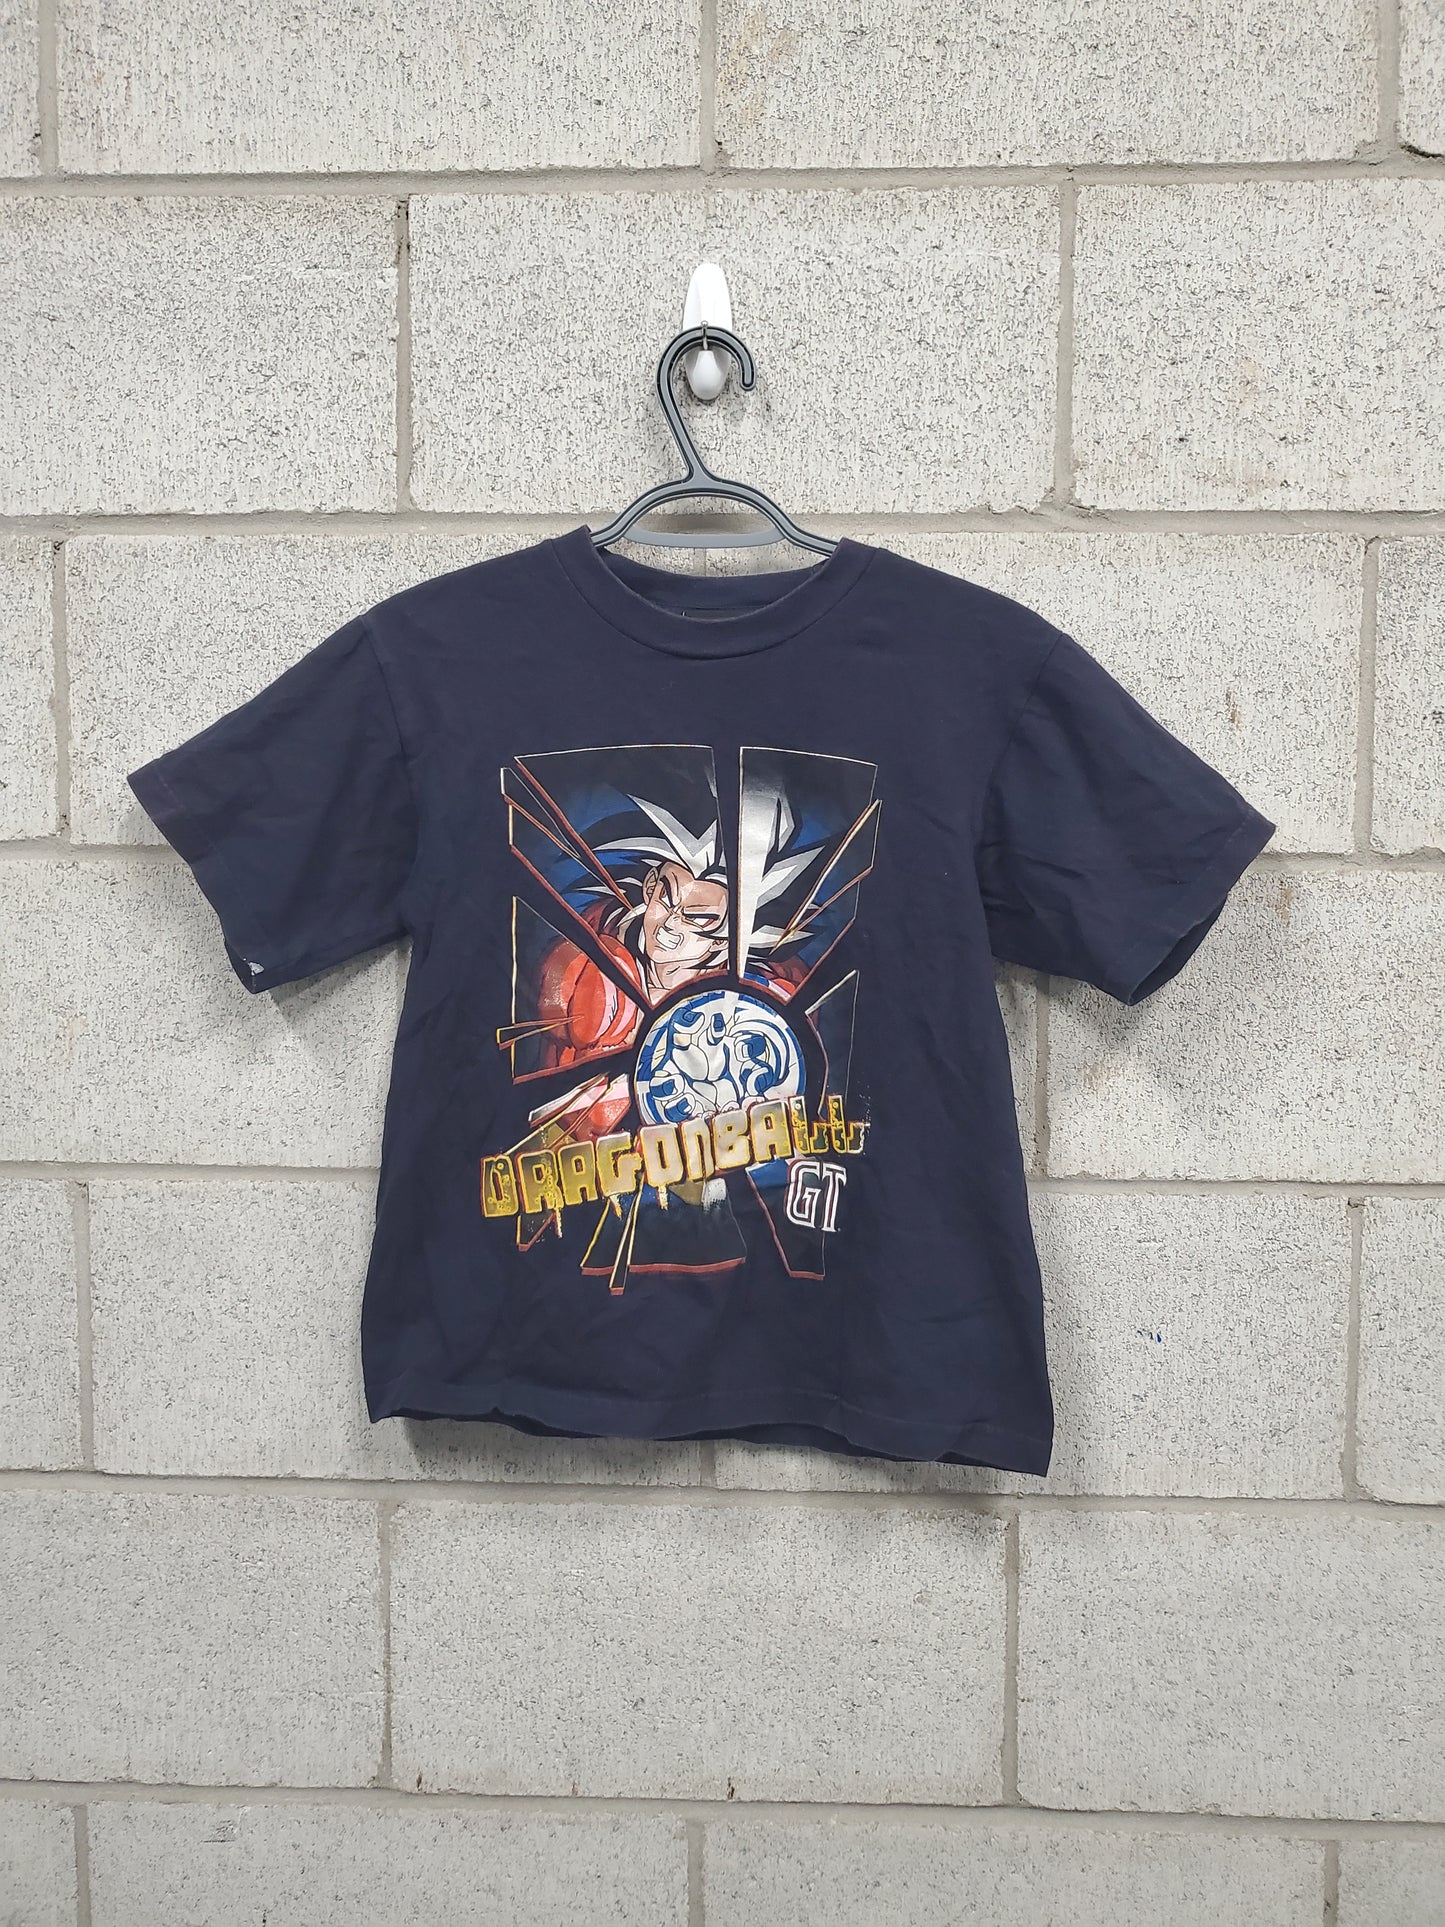 Kids 2003 Dragonball GT T-Shirt Size Medium